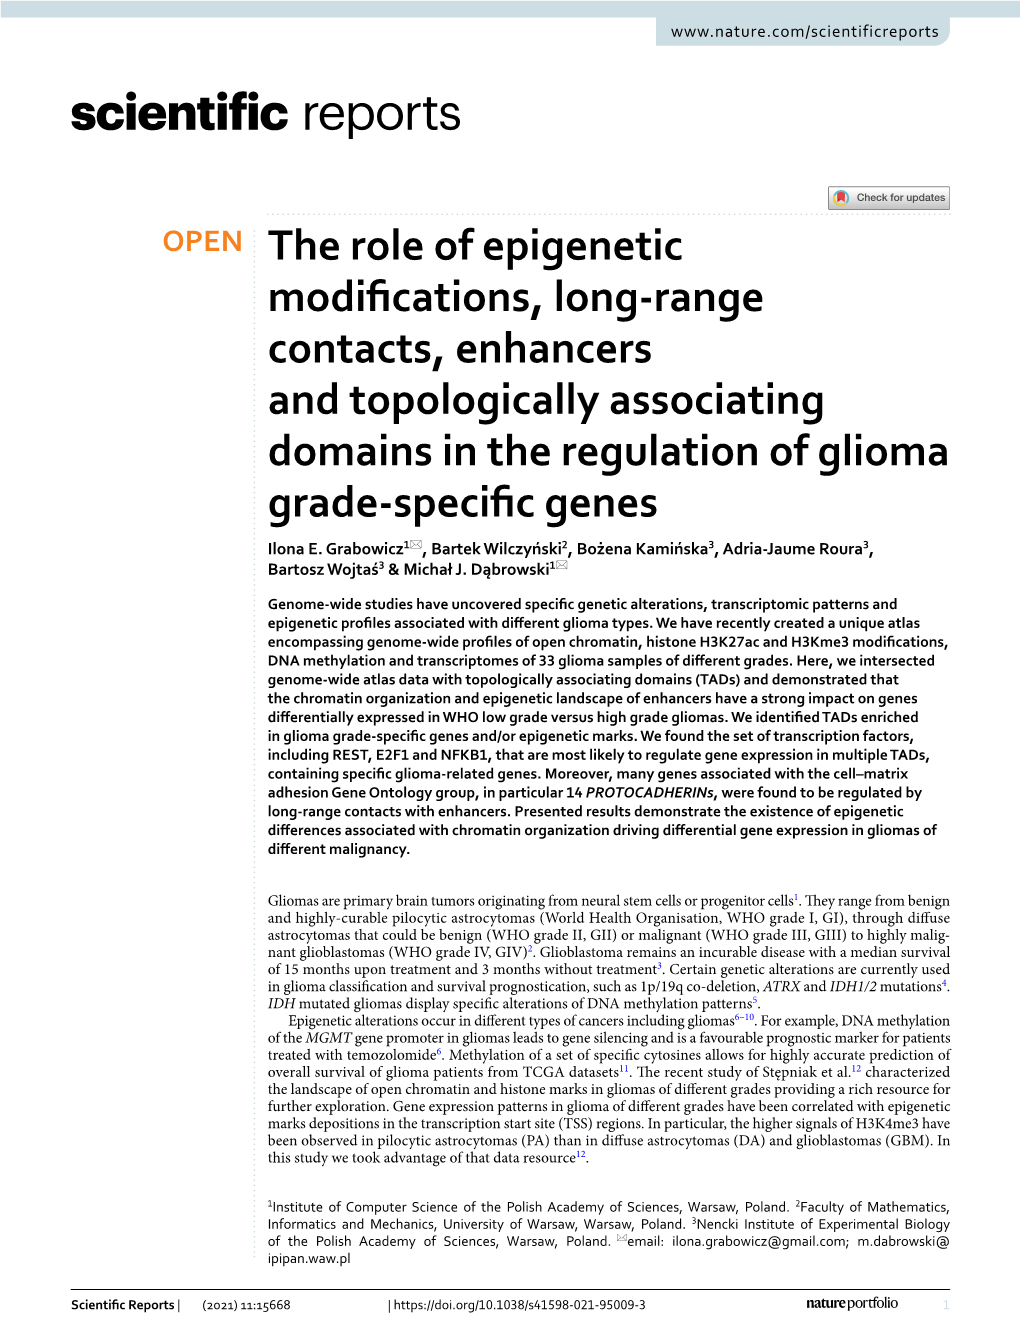 The Role of Epigenetic Modifications, Long-Range Contacts, Enhancers